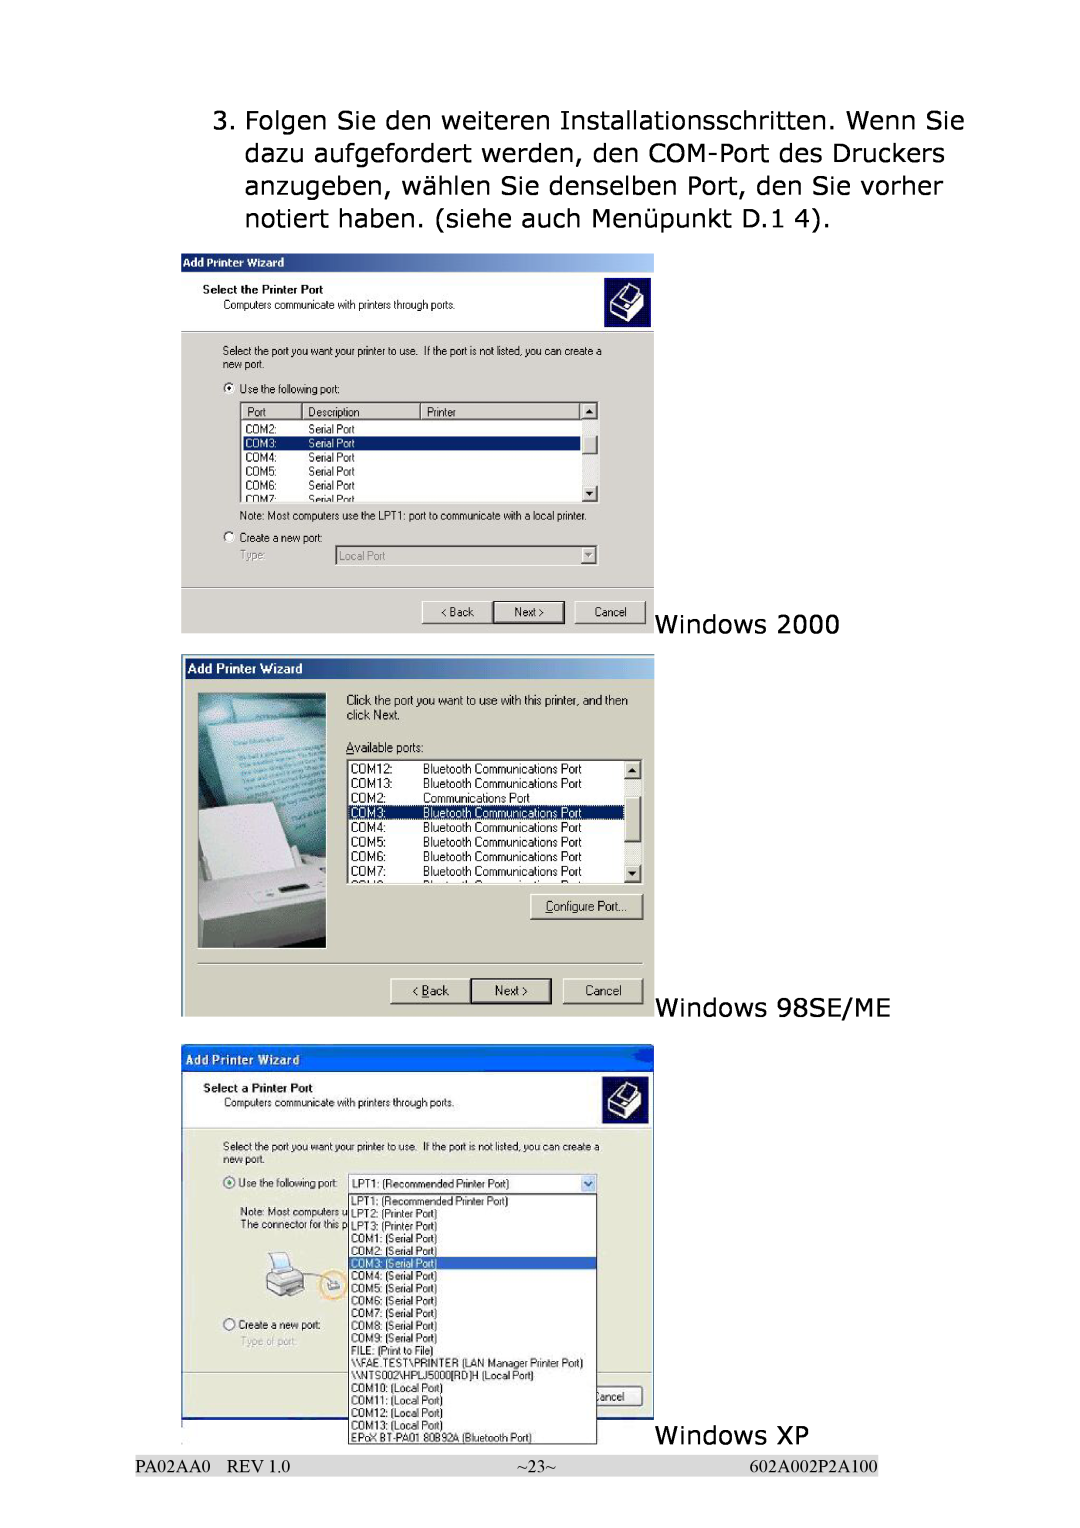 EPoX Computer BT-PA02A manual Windows Windows 98SE/ME Windows XP, PA02AA0 REV, ~23~, 602A002P2A100 